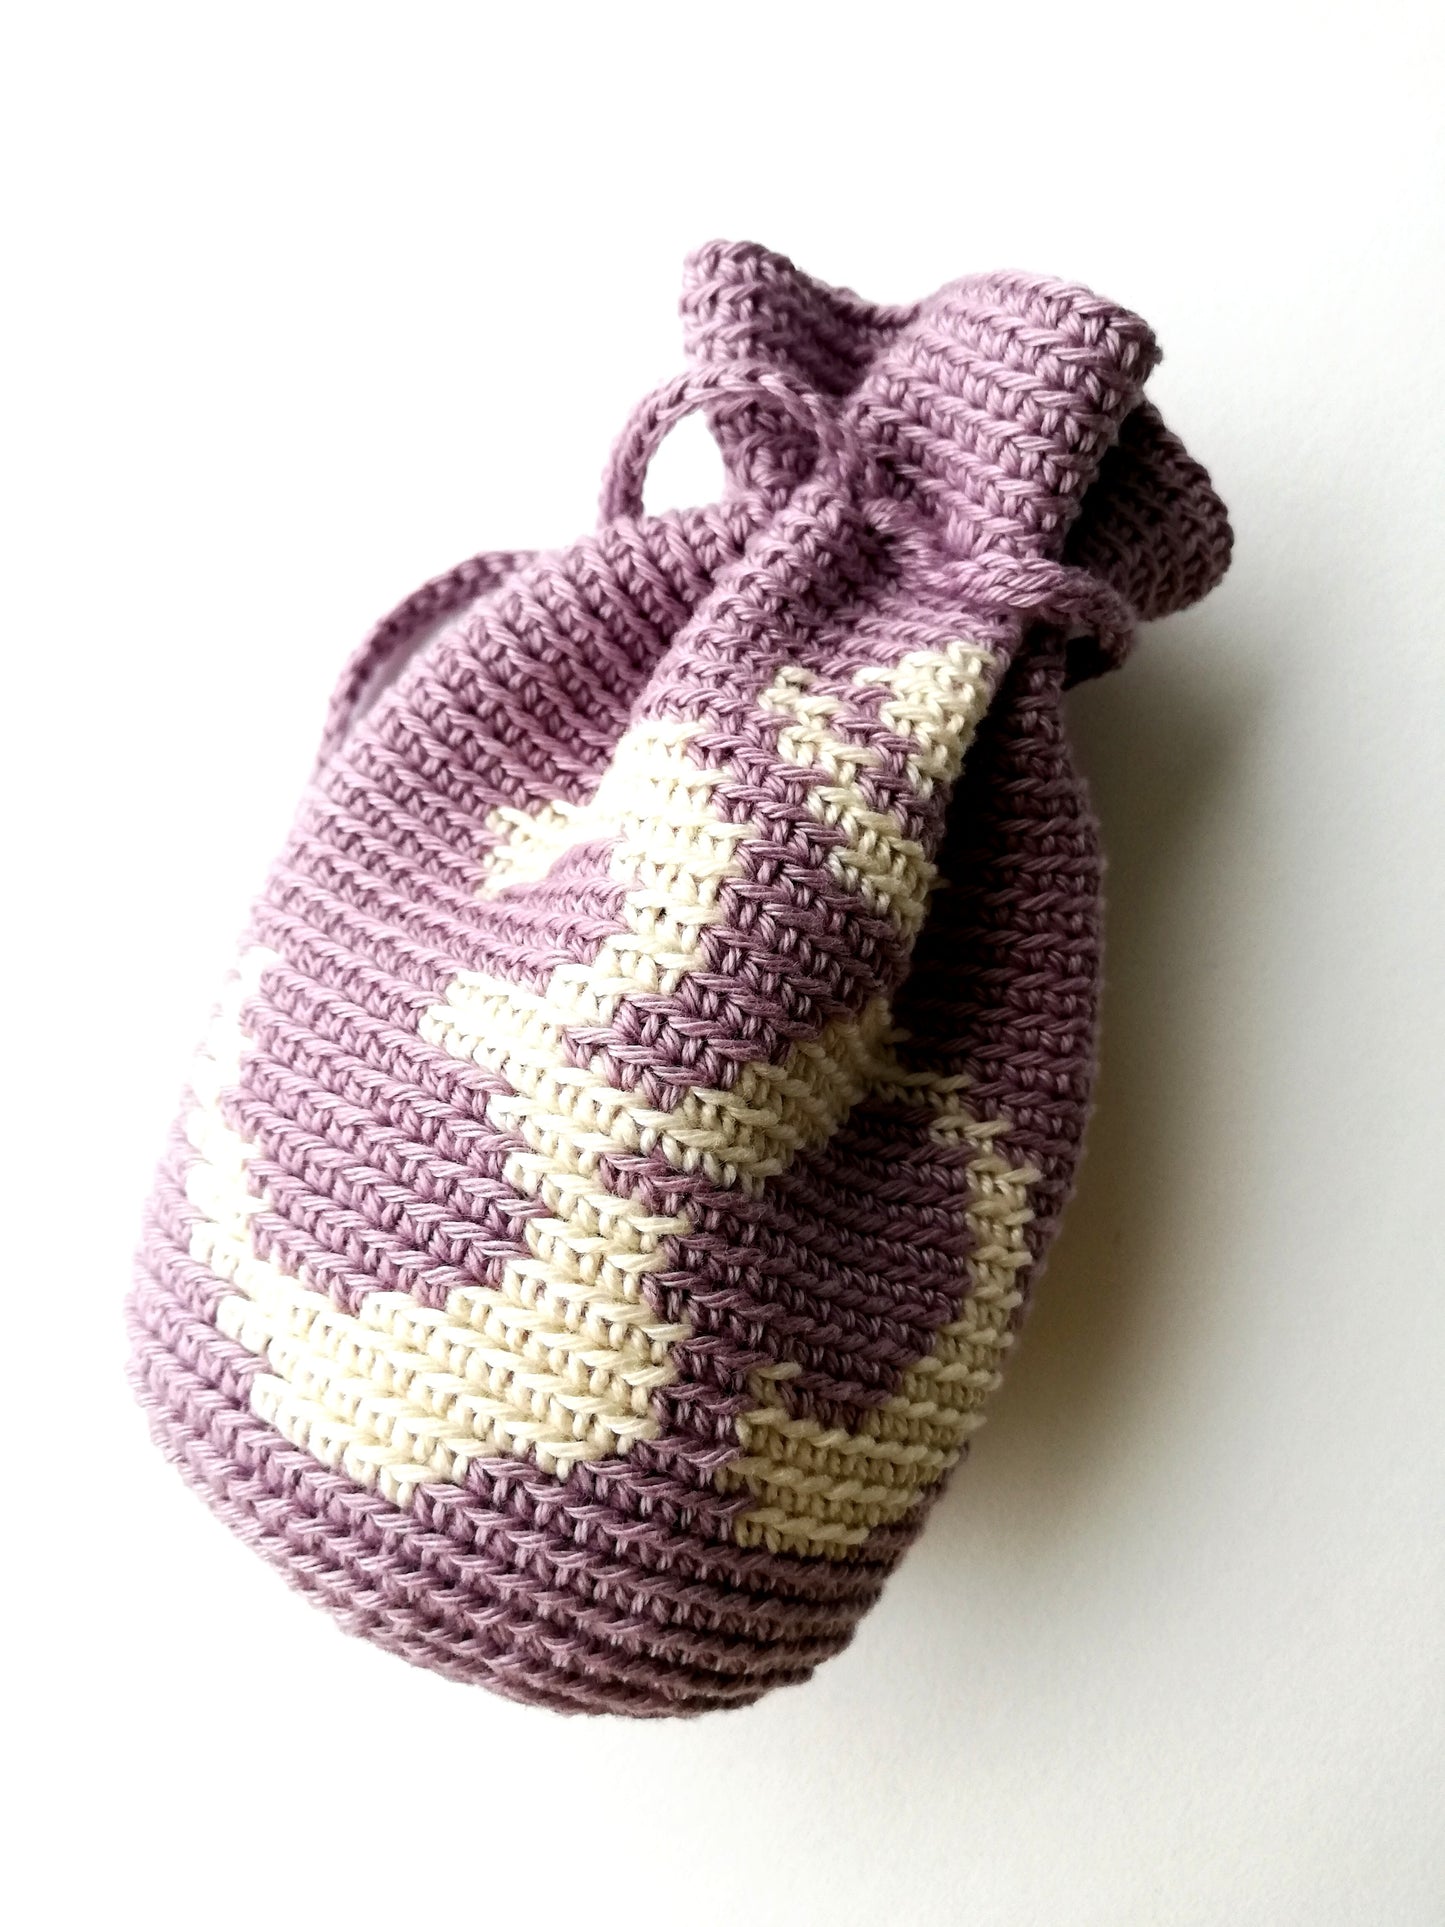 Crochet drawstring bag Yoga OM symbol